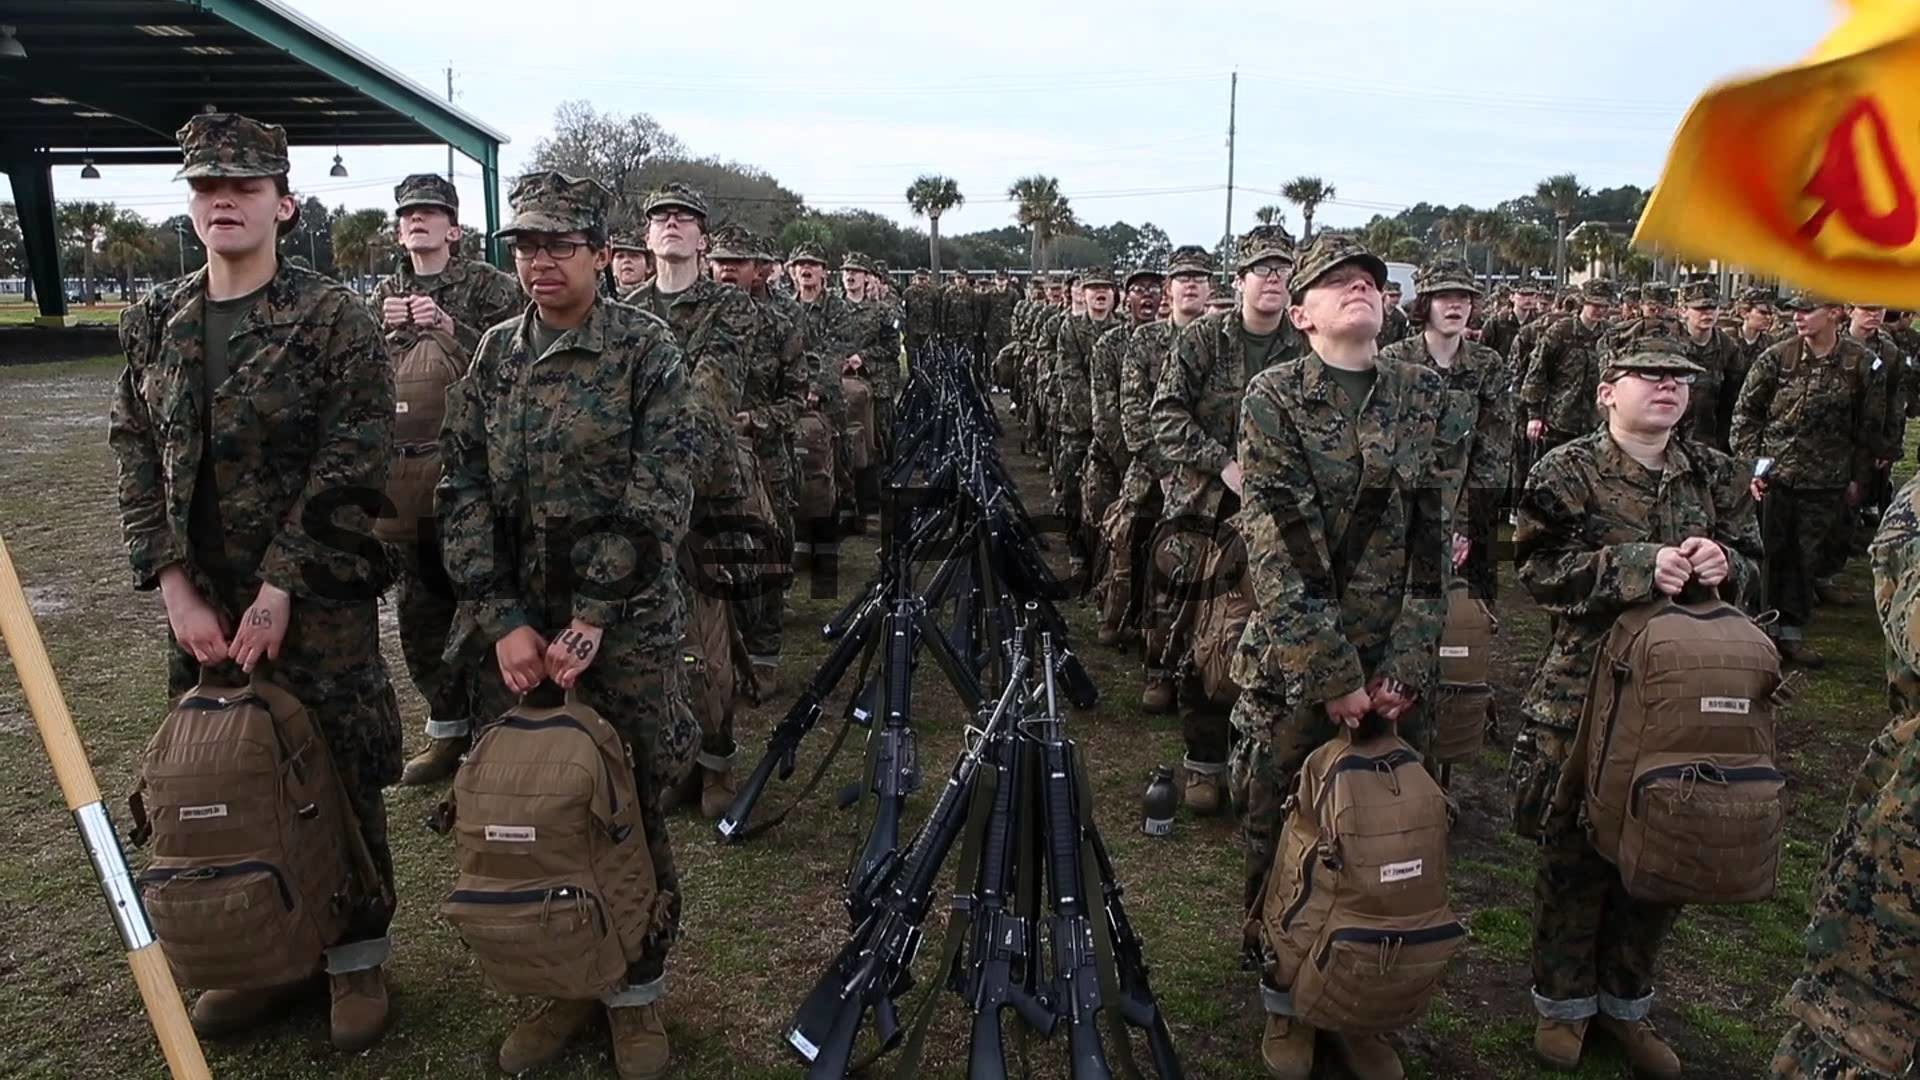 Female Marine recruits train during boot camp February 27